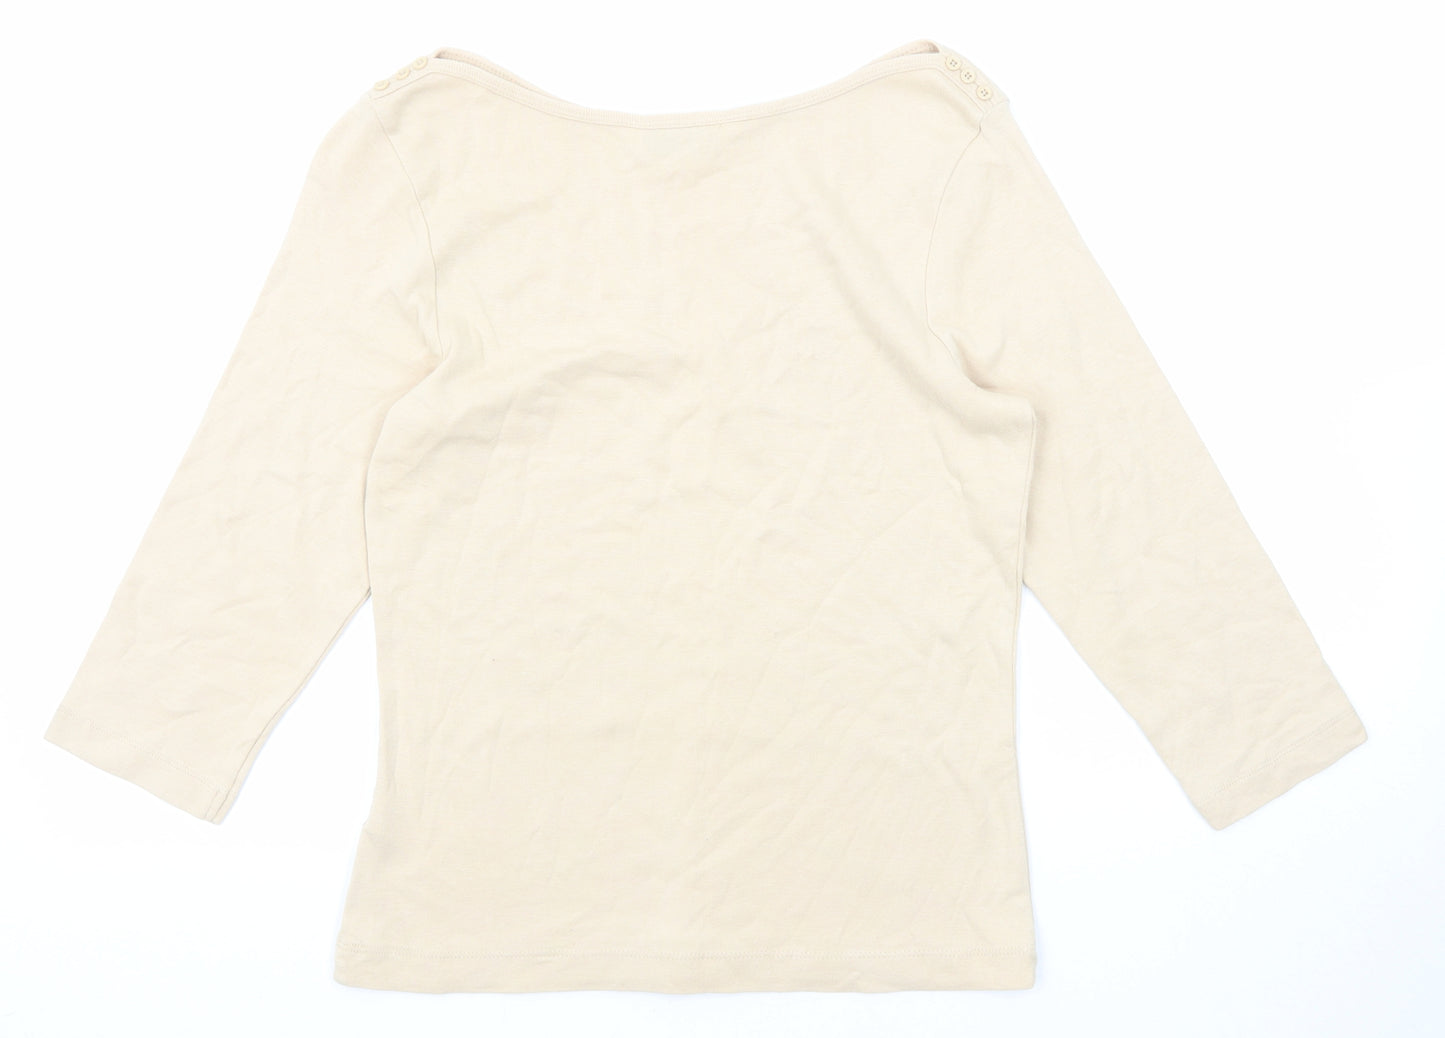 BHS Womens Beige Cotton Basic Blouse Size 10 Round Neck